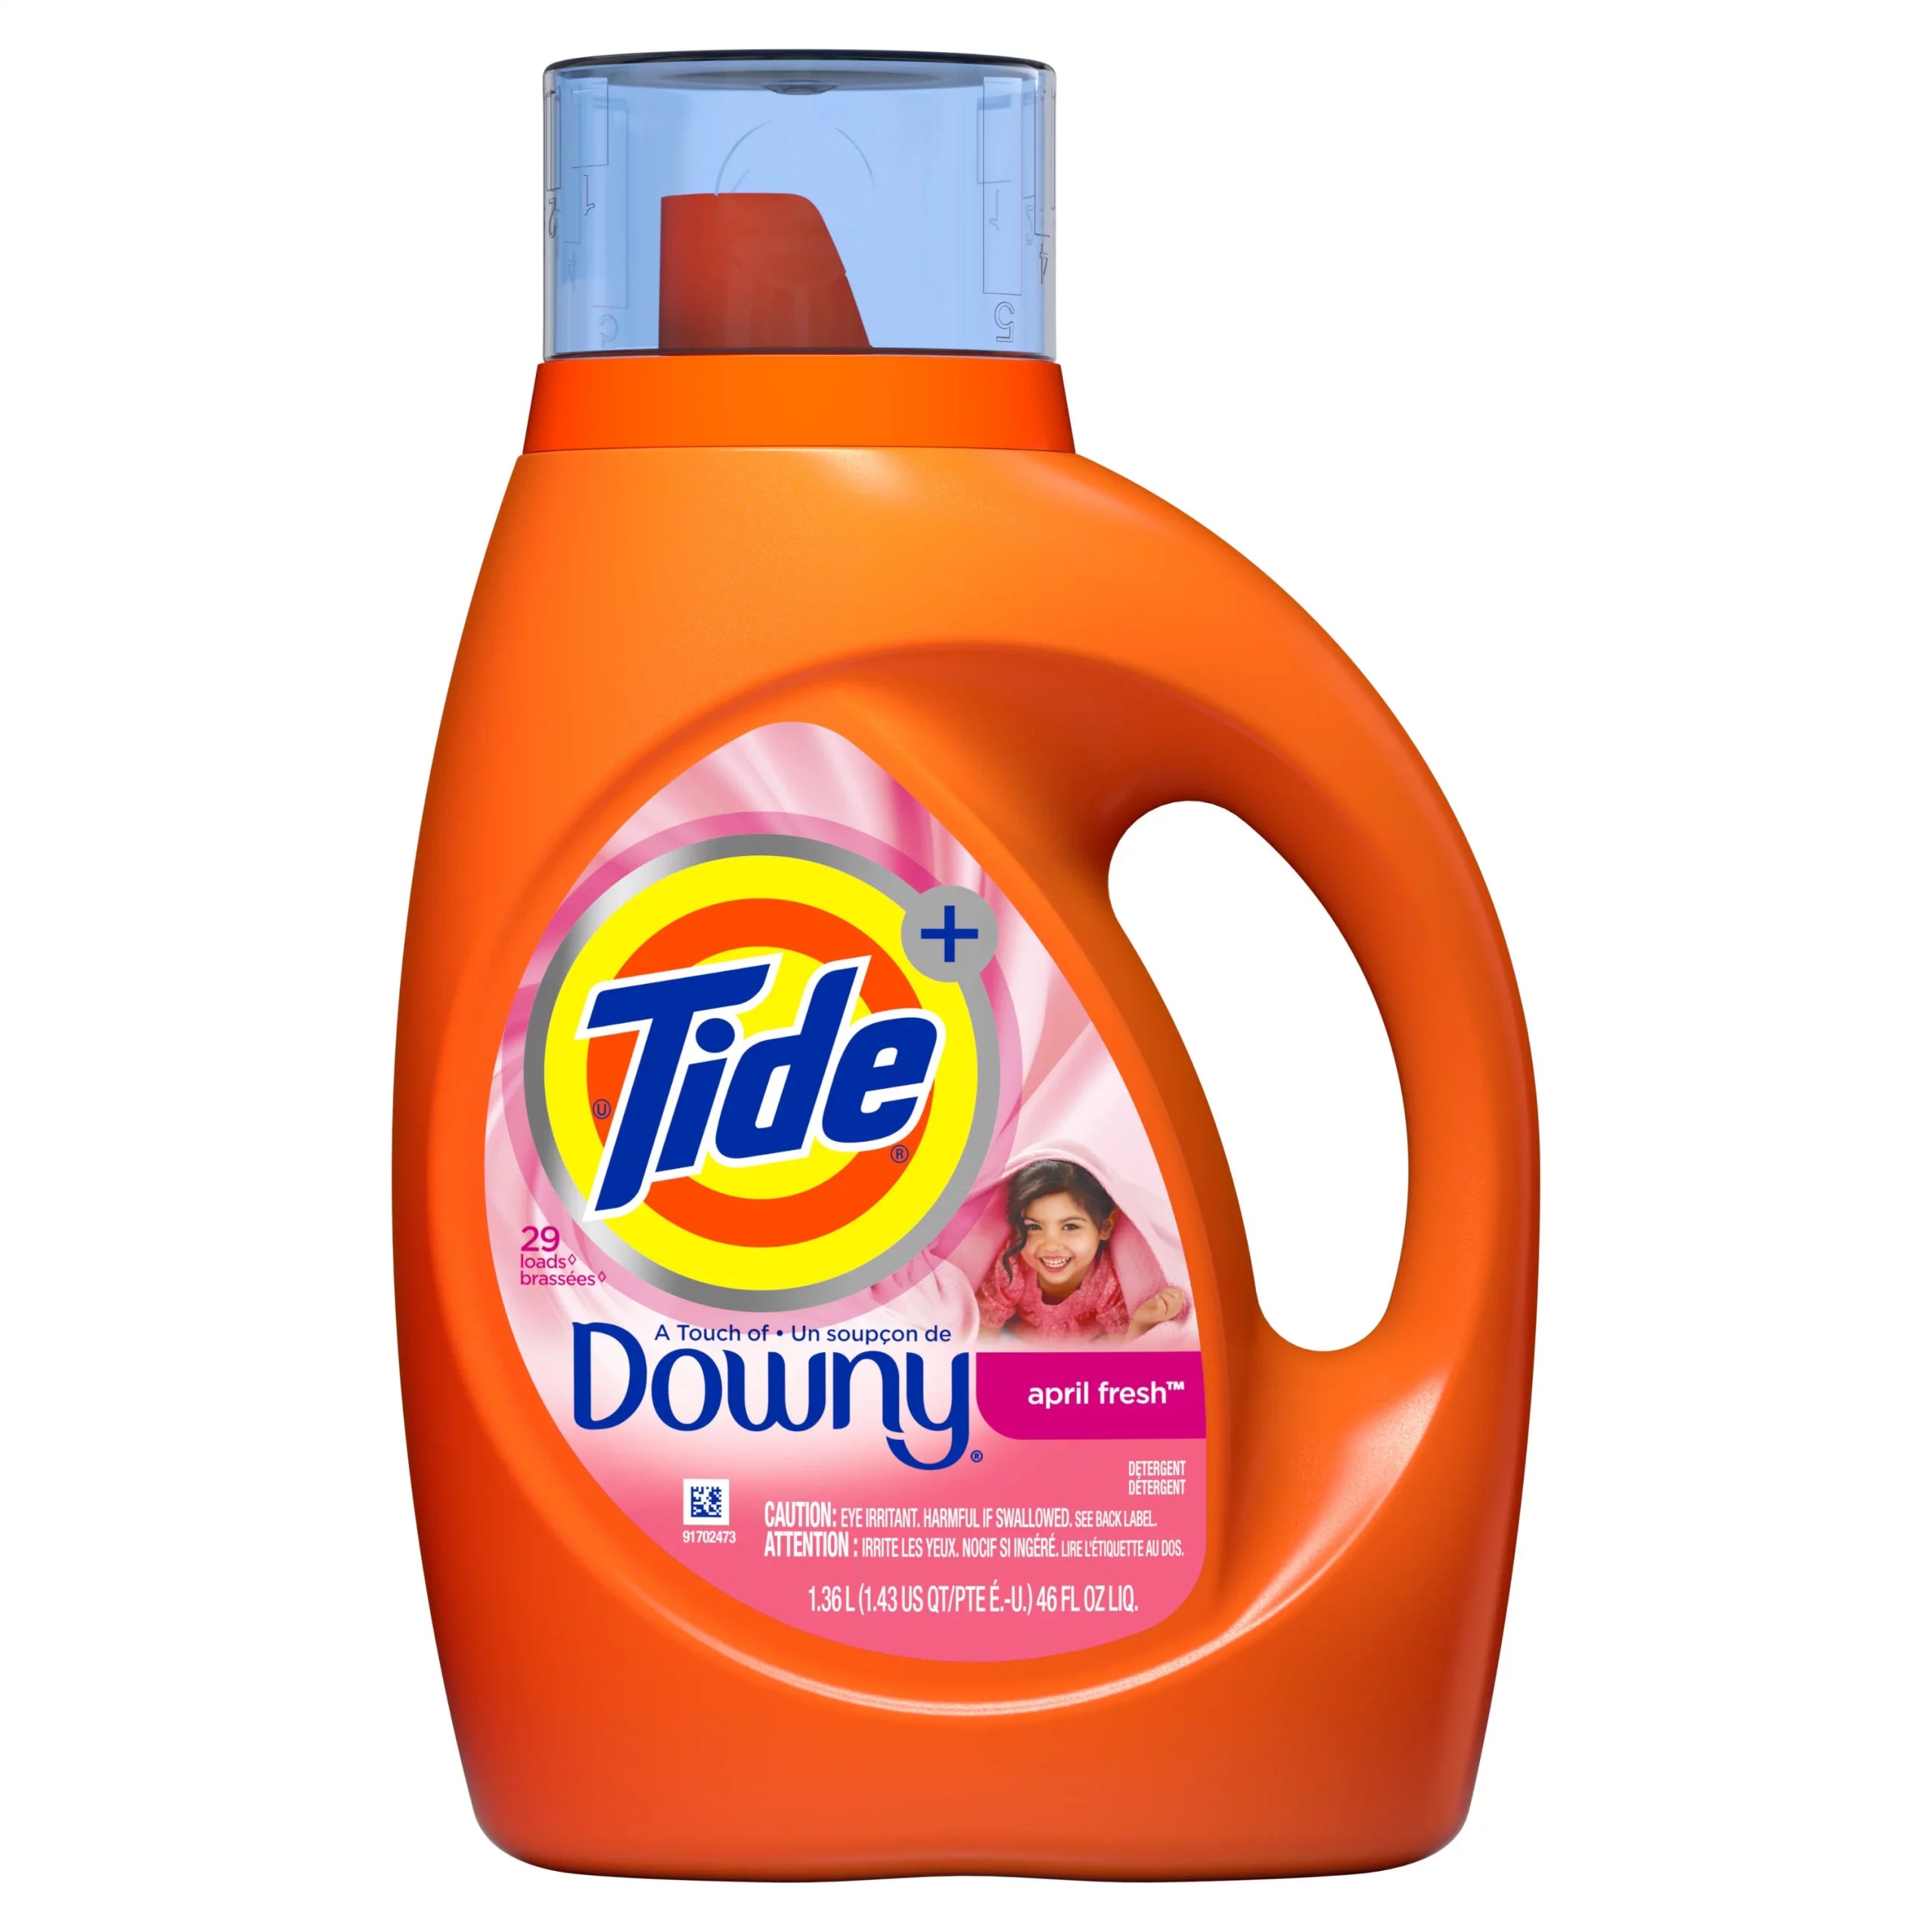 Tide Liquid Laundry Detergent High Efficiency Downy April Fresh 29 Loads (1.36L)